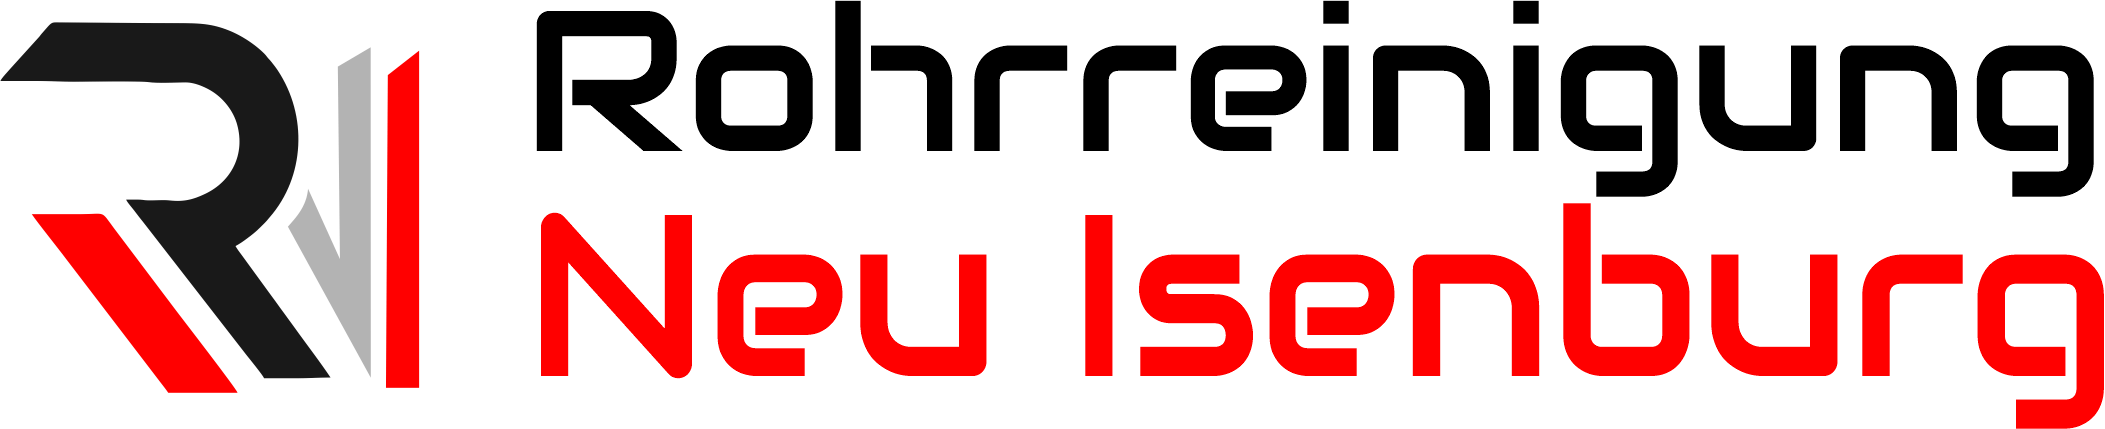 Rohrreinigung Neu Isenburg Logo